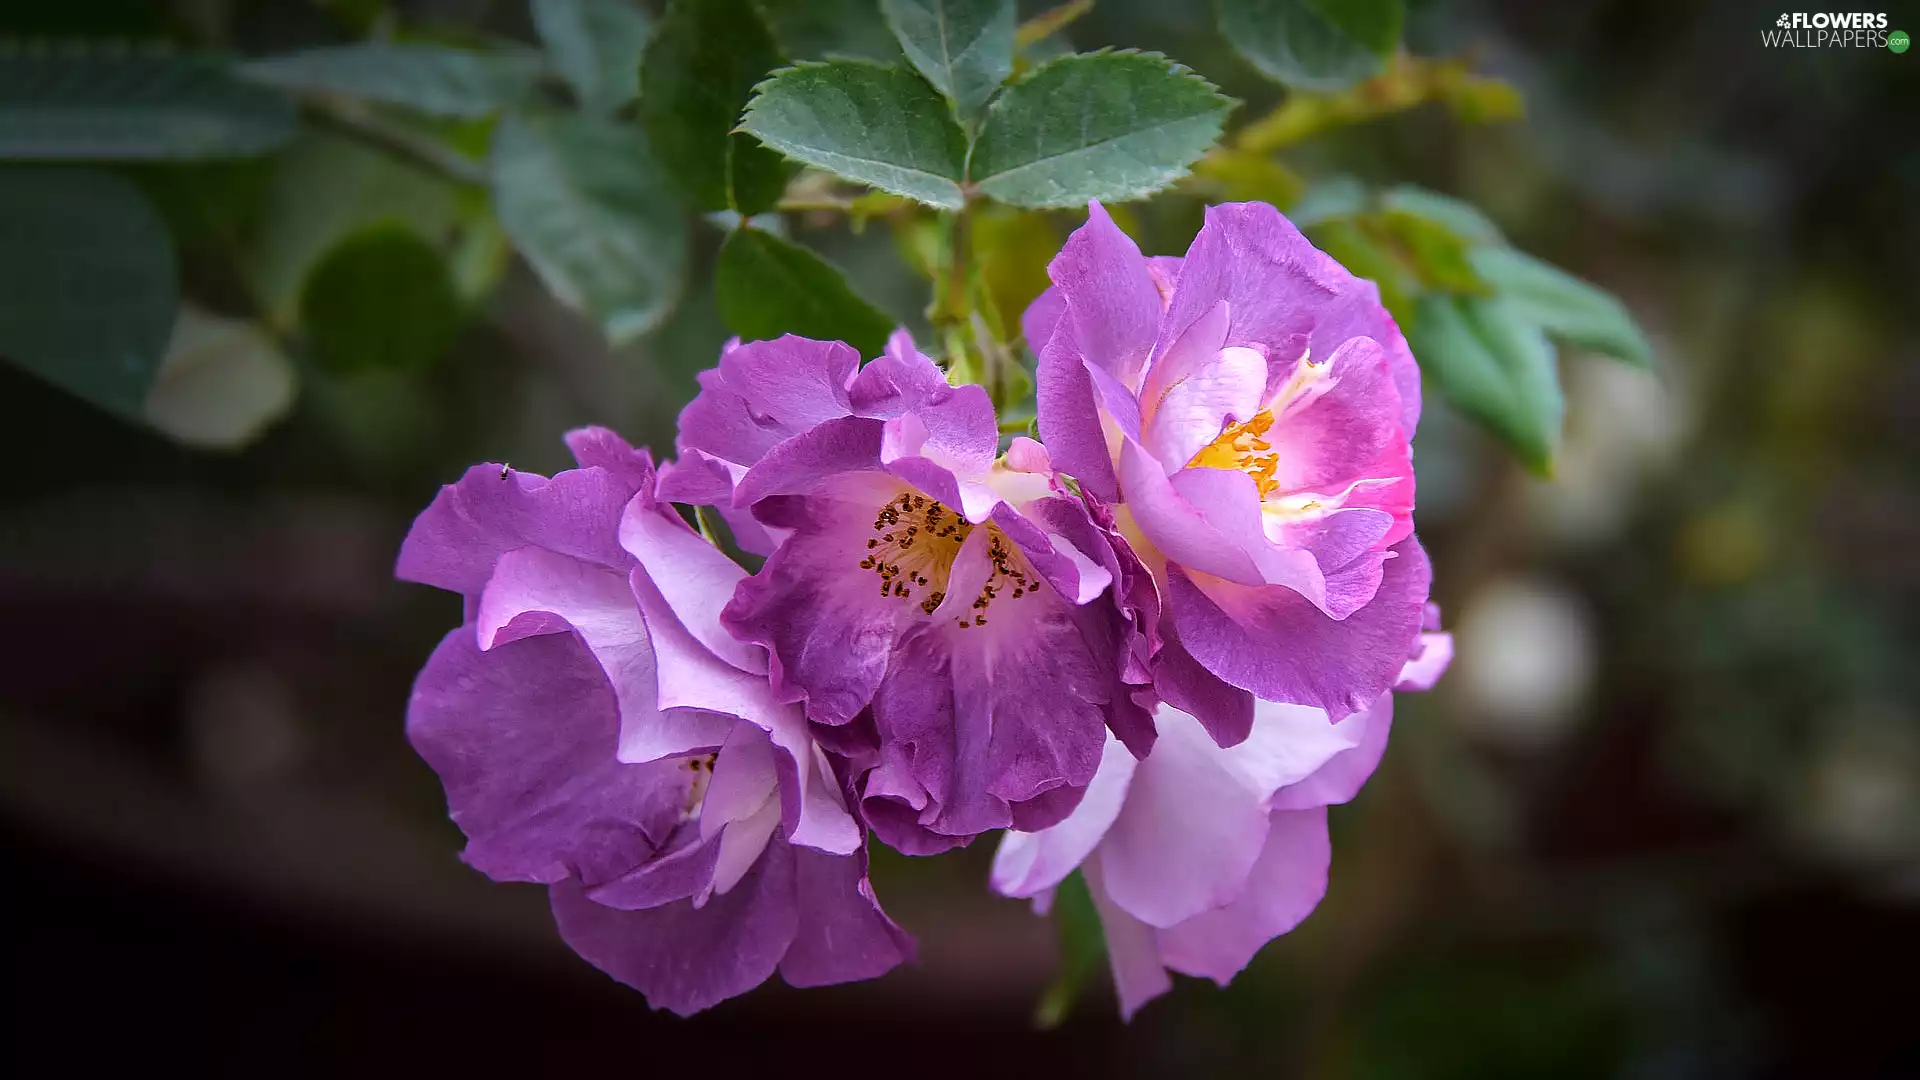 Light Purple, roses, blurry background, flourishing